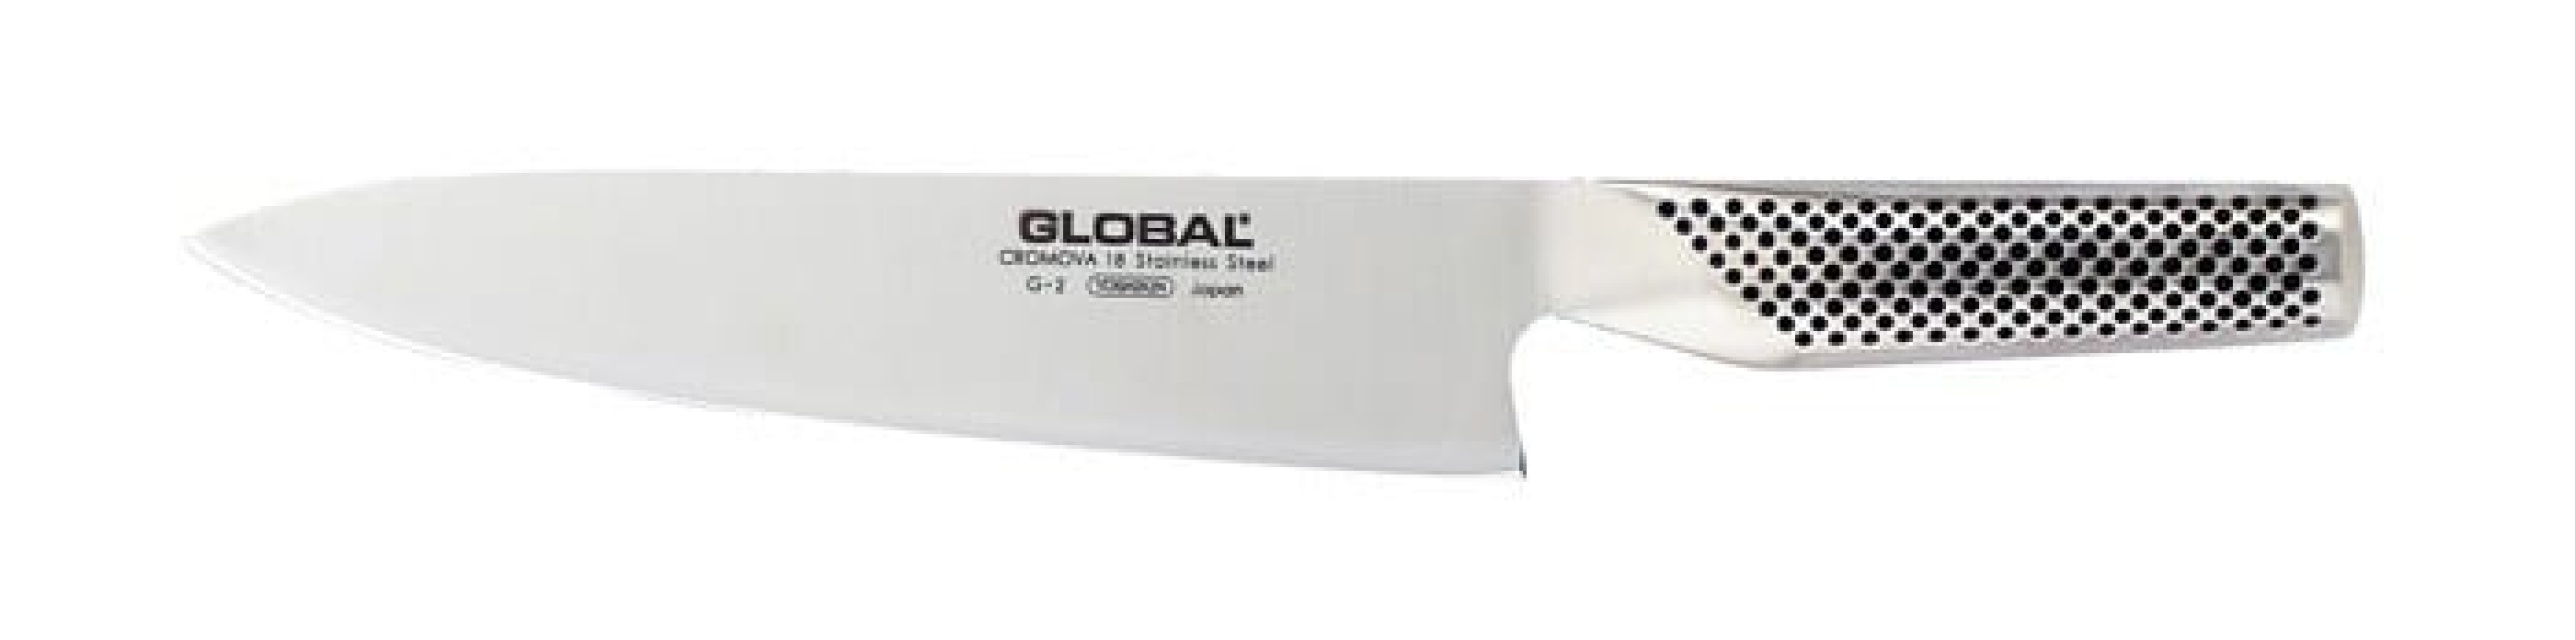 Kockkniv G-2, 20 cm - Global